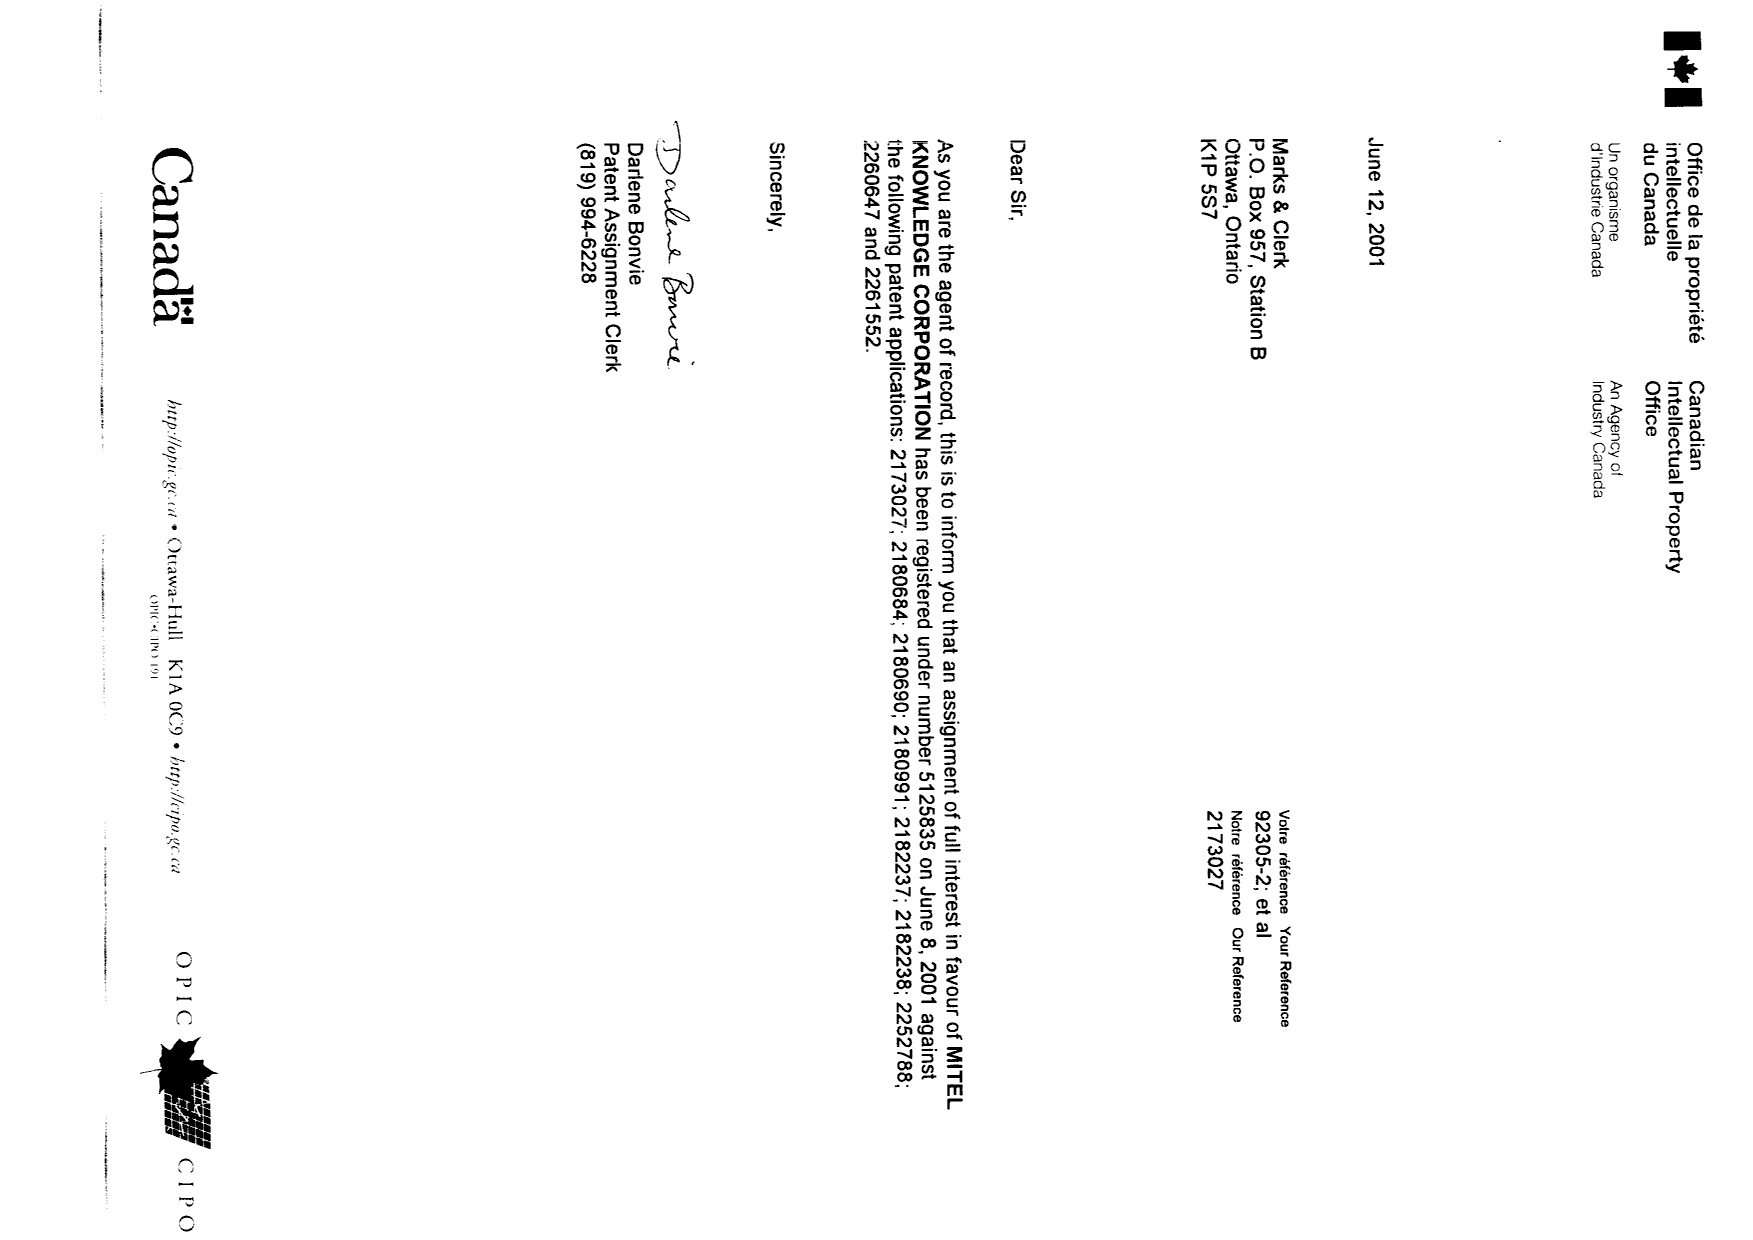 Canadian Patent Document 2252788. Correspondence 20010612. Image 1 of 1